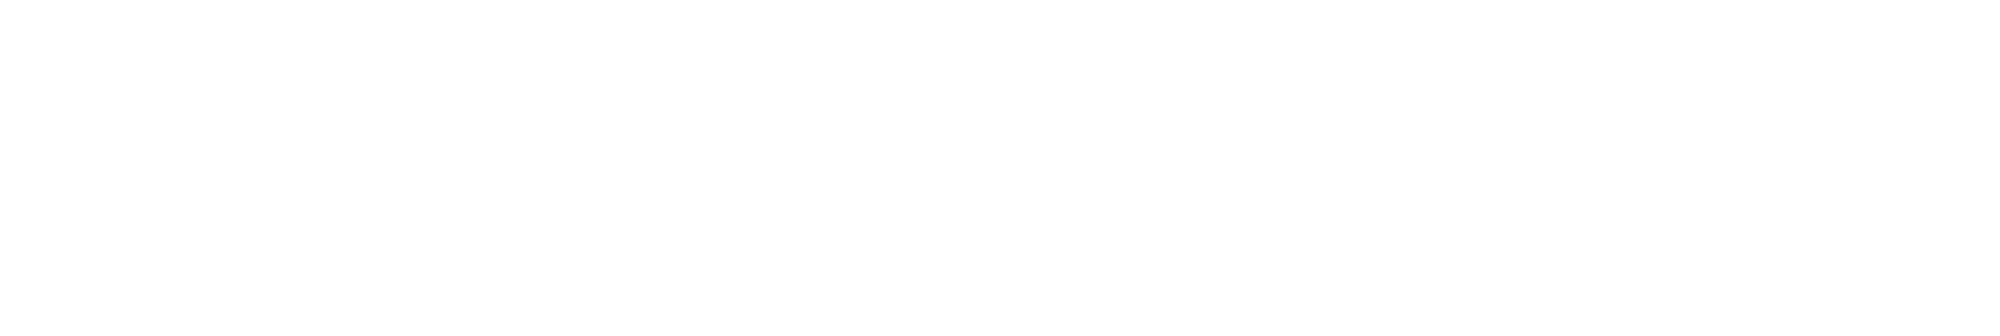 cadwork_logo